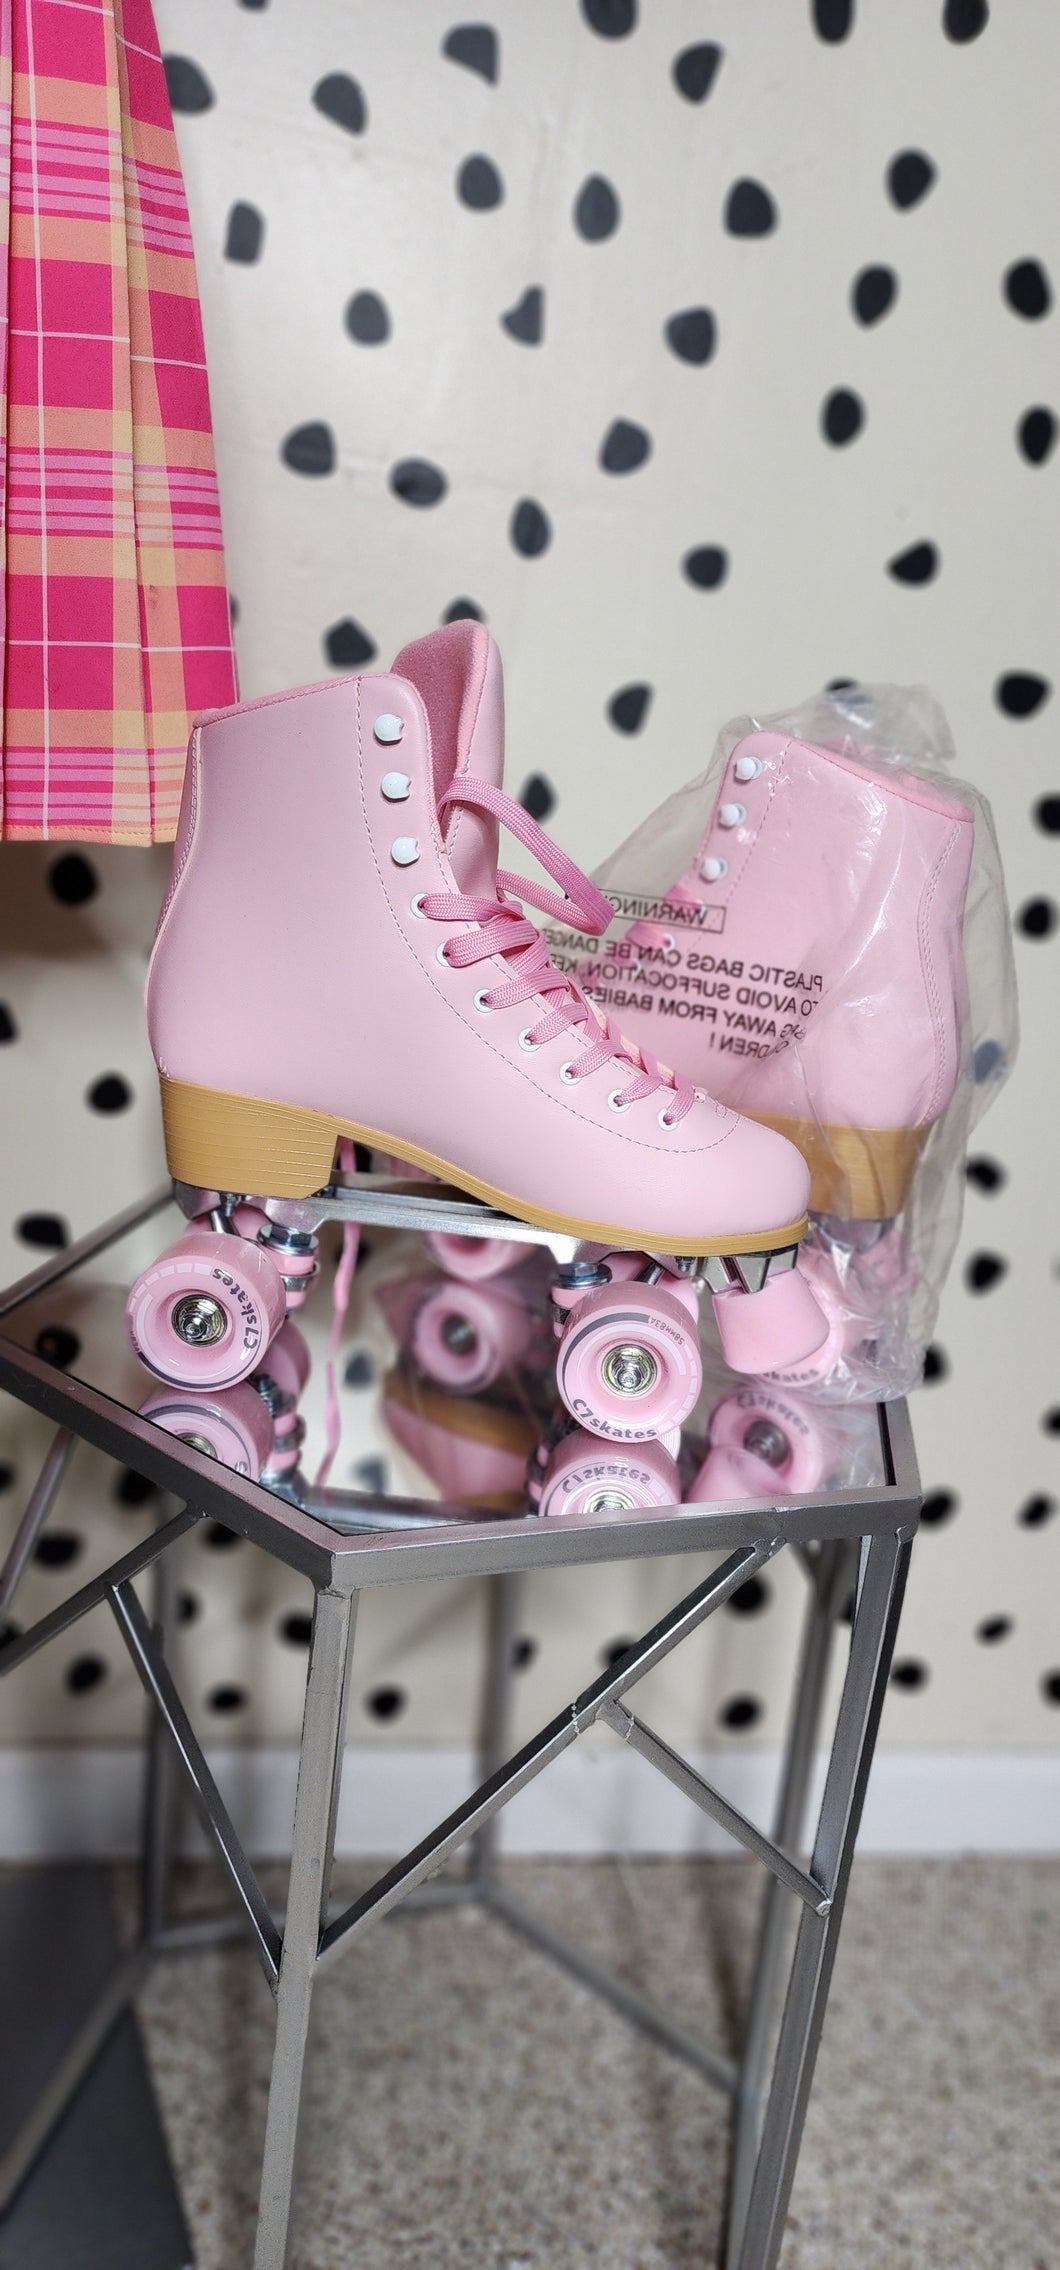 Nwt Pink Roller skates   sz 10